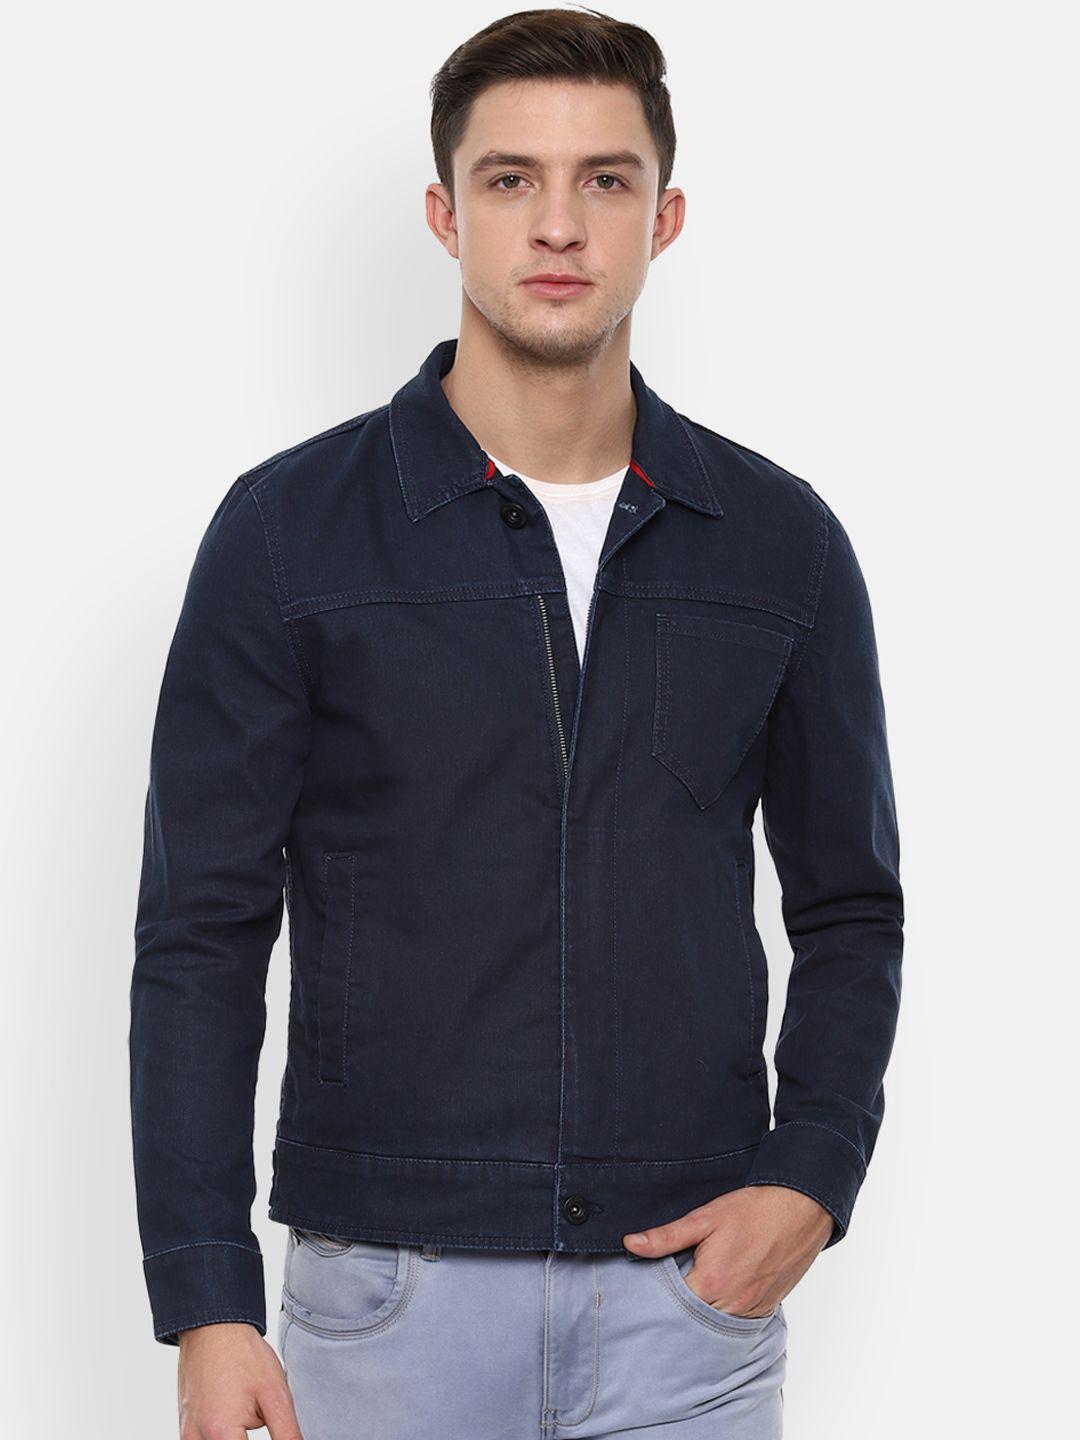 louis-philippe-jeans-men-navy-blue-solid-denim-jacket